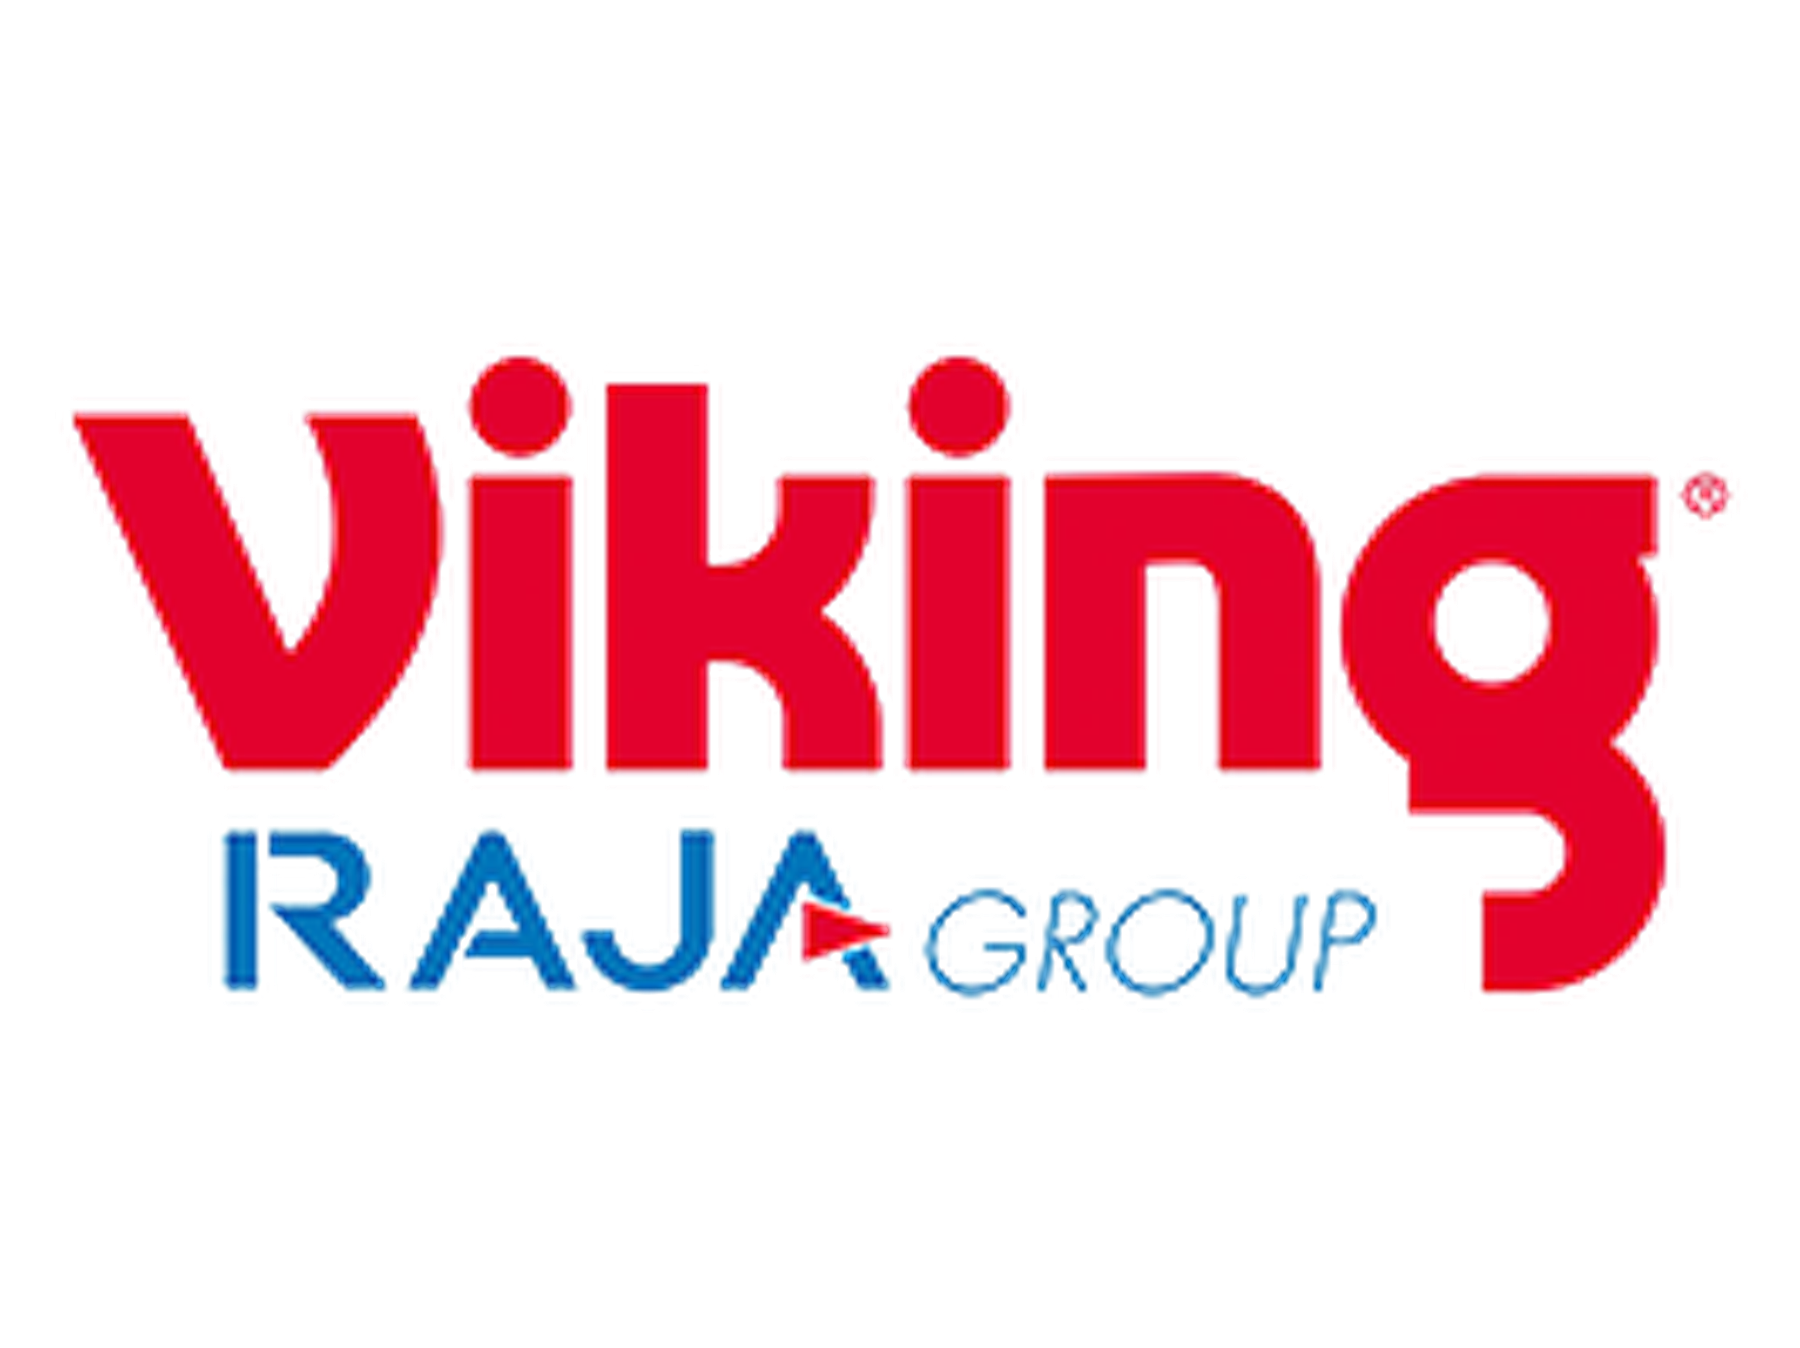 Viking kortingscode